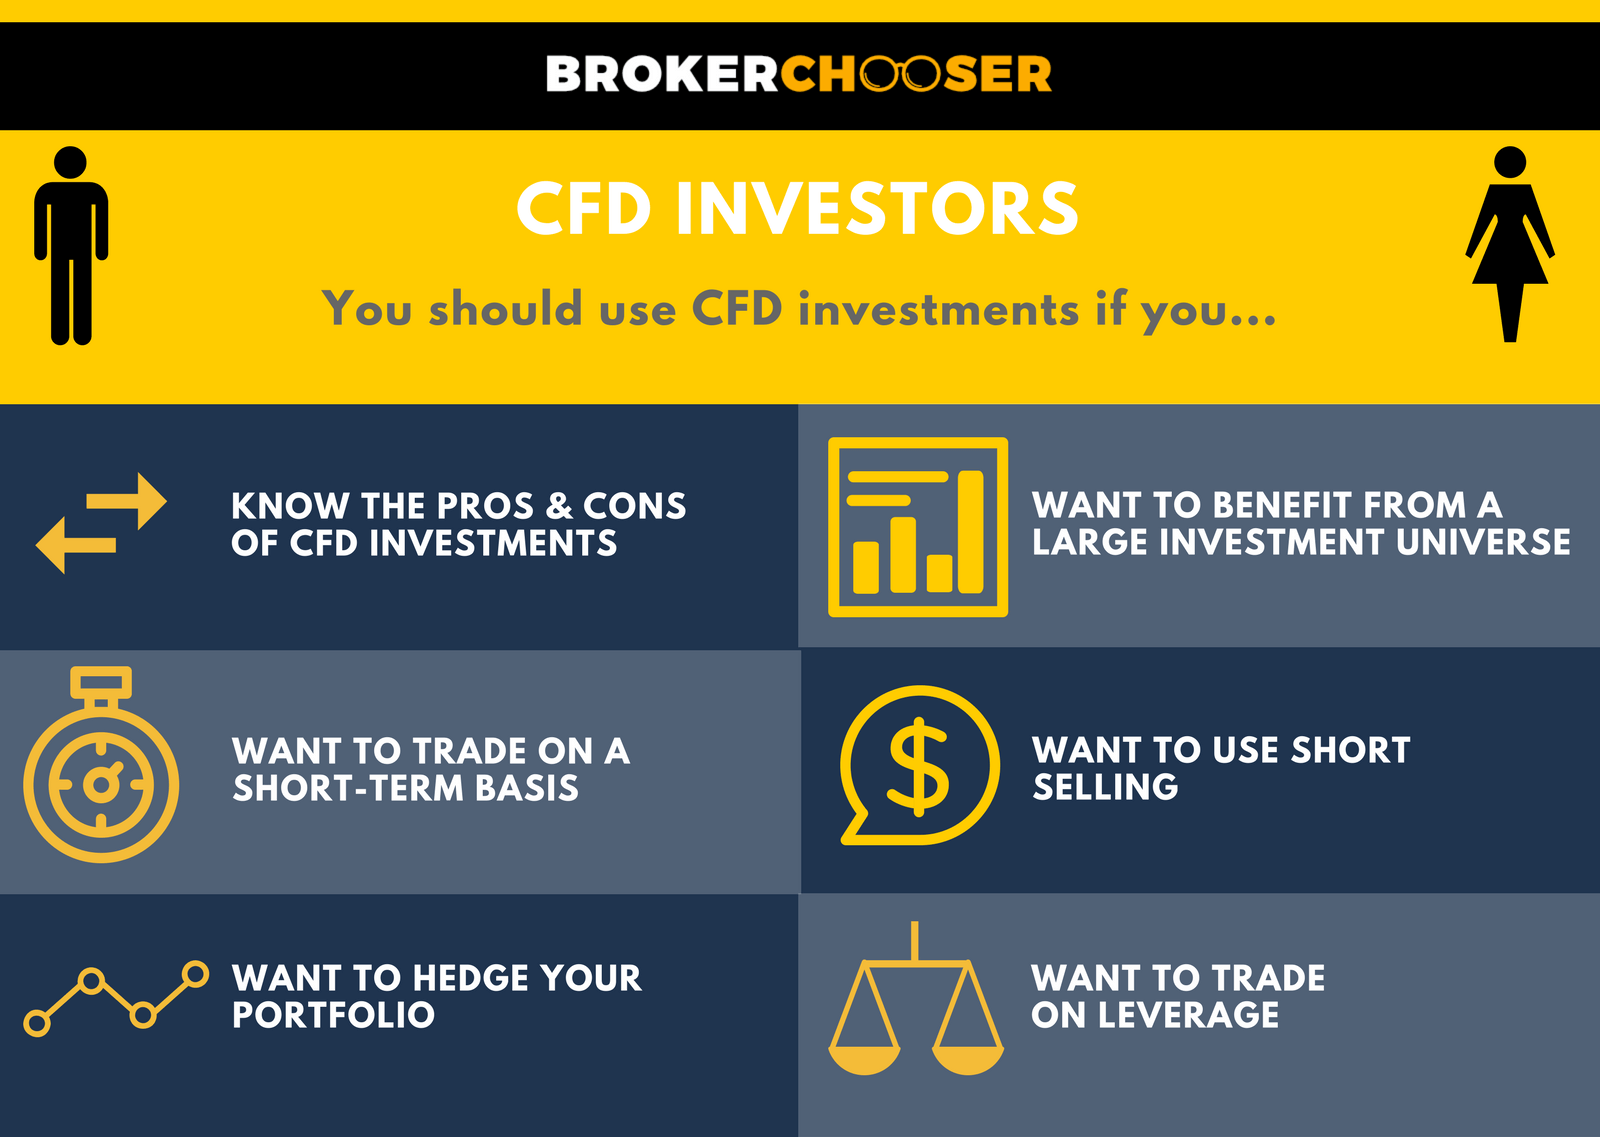 CFD investors